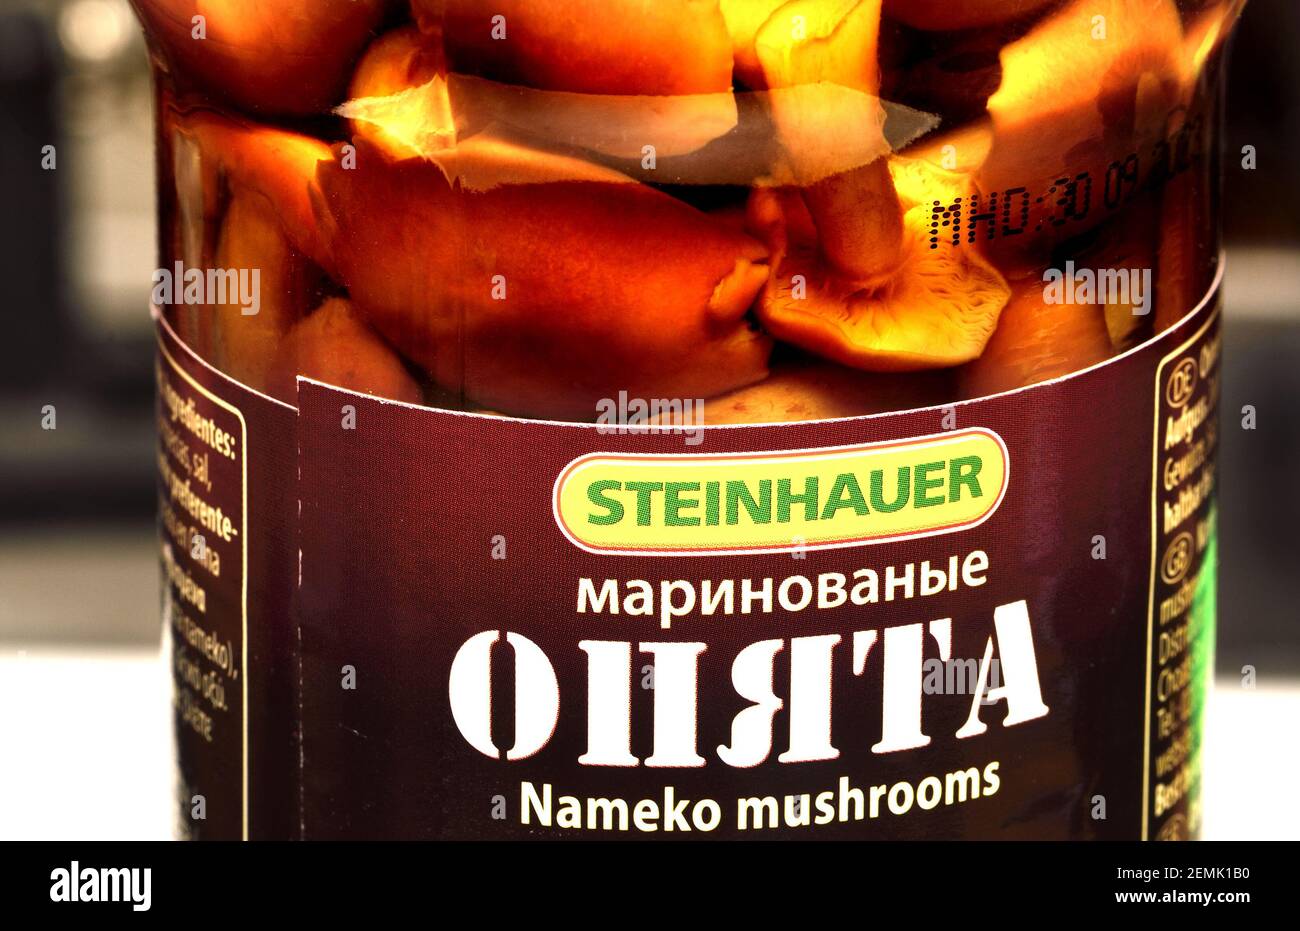 Jar of Steinhauer marinated Nameko mushrooms with Russian language label Stock Photo